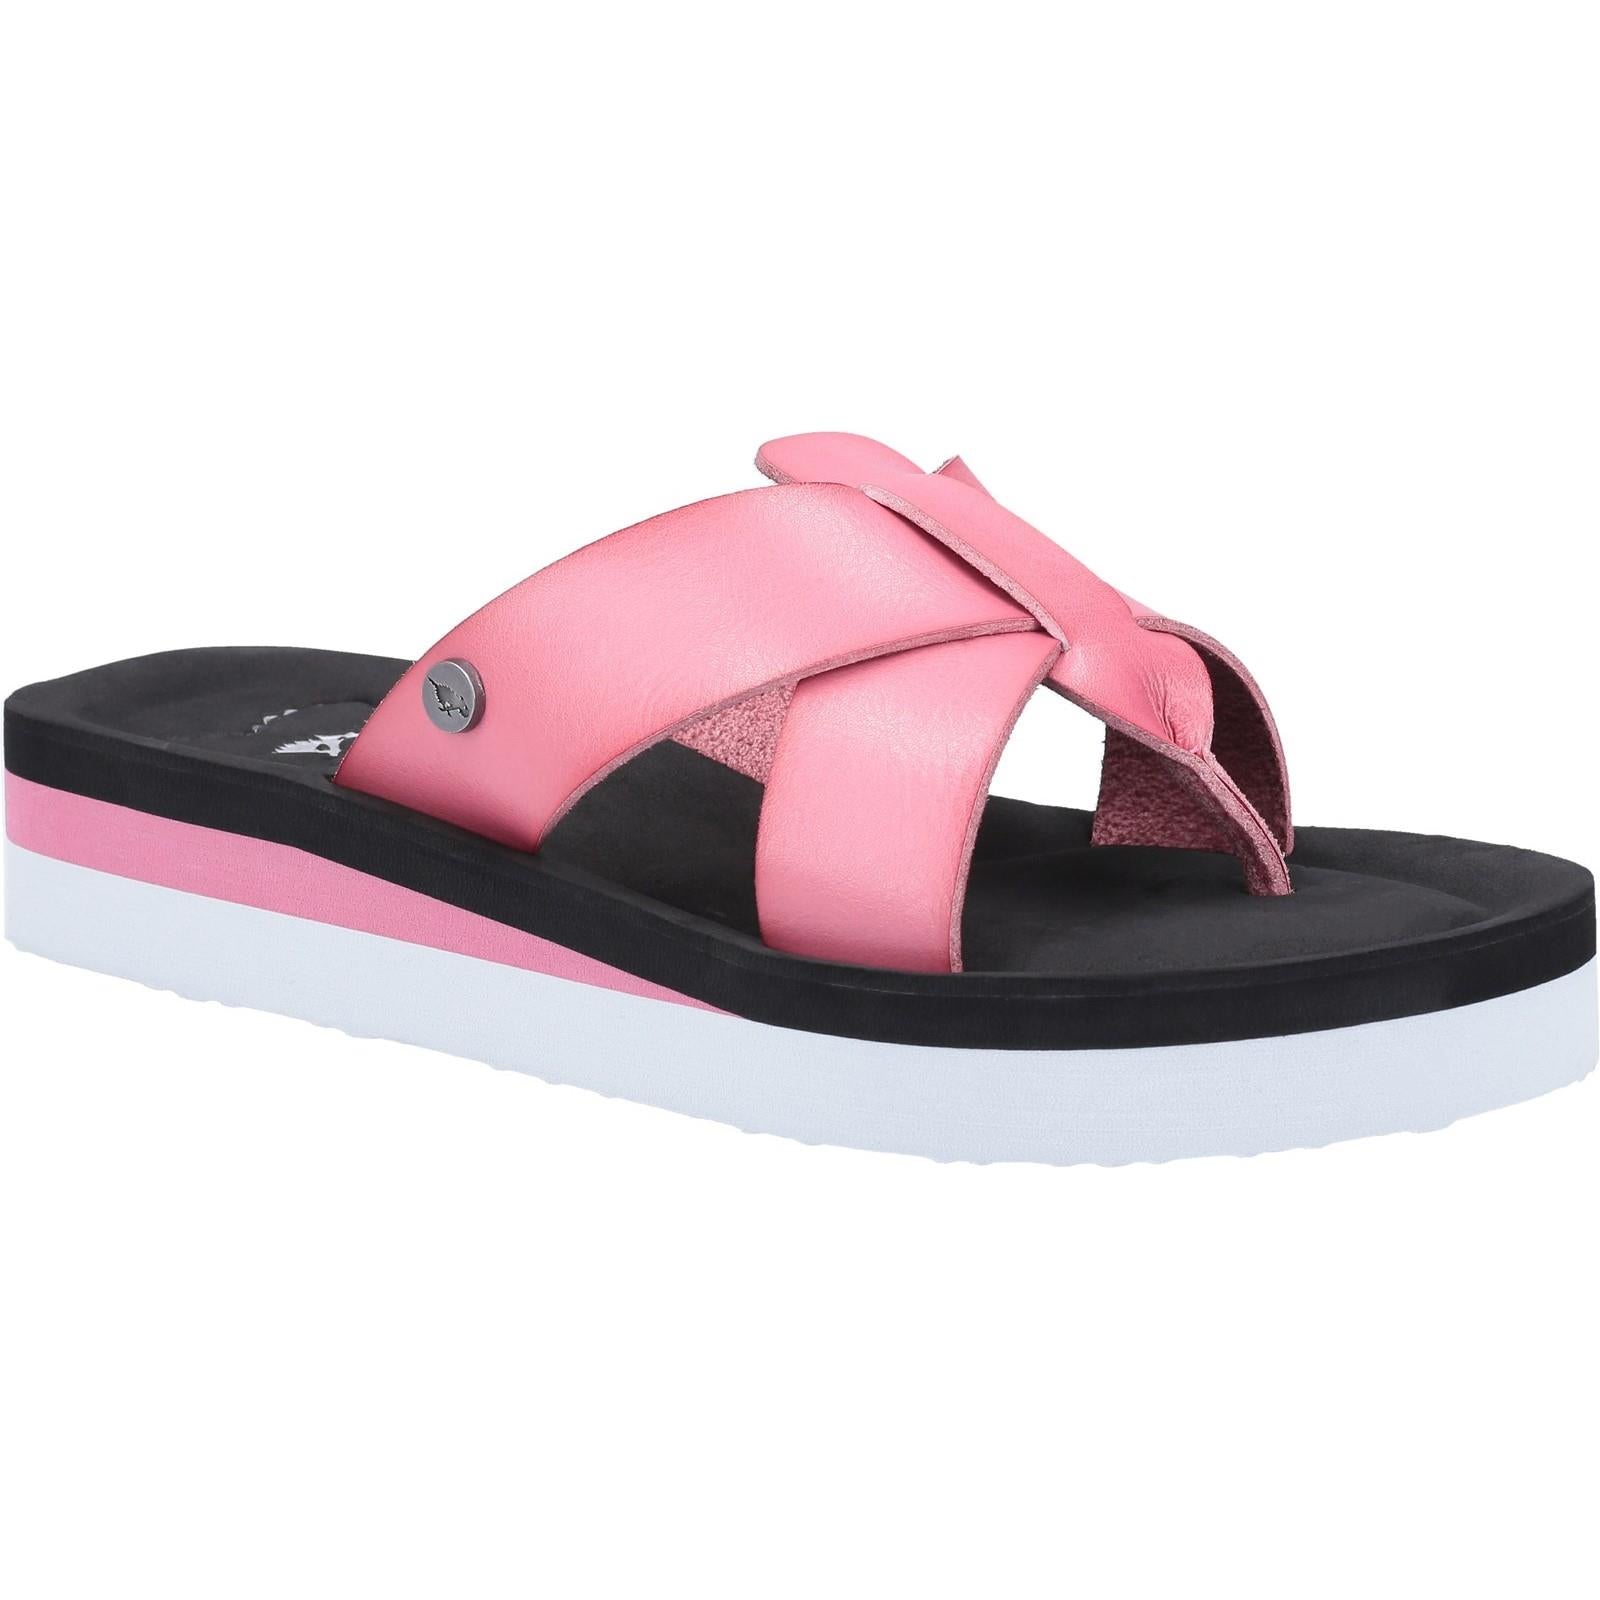 Rocket Dog Wilmer Burn ladies rose pink summer sliders flip flops sandals